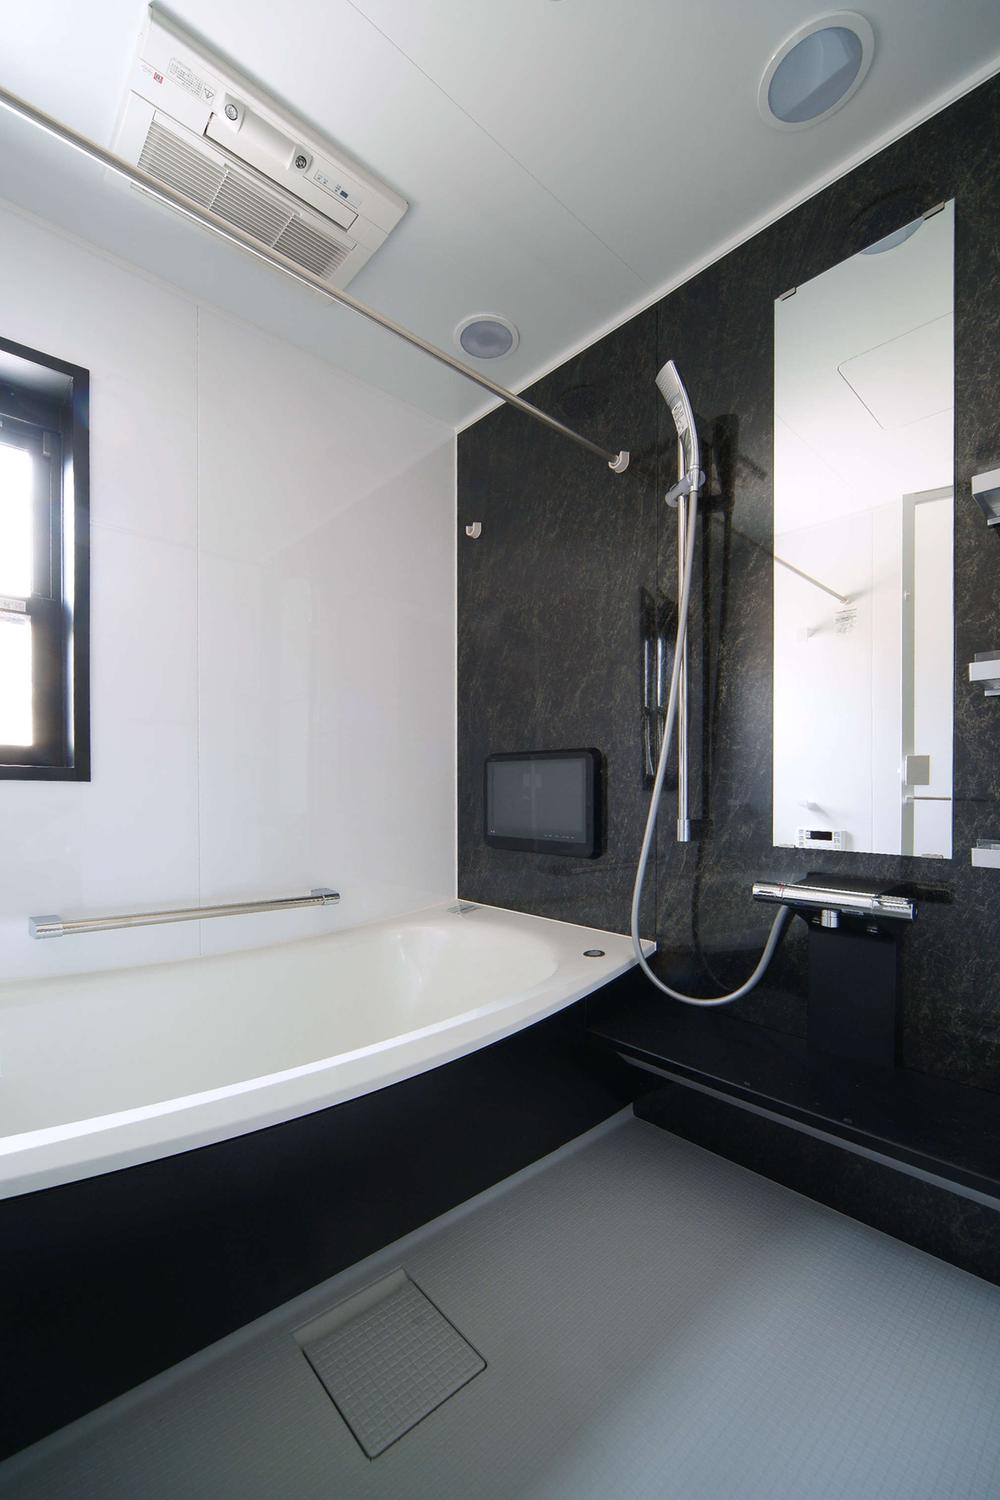 Same specifications photo (bathroom). Bashireion boast of bathroom.